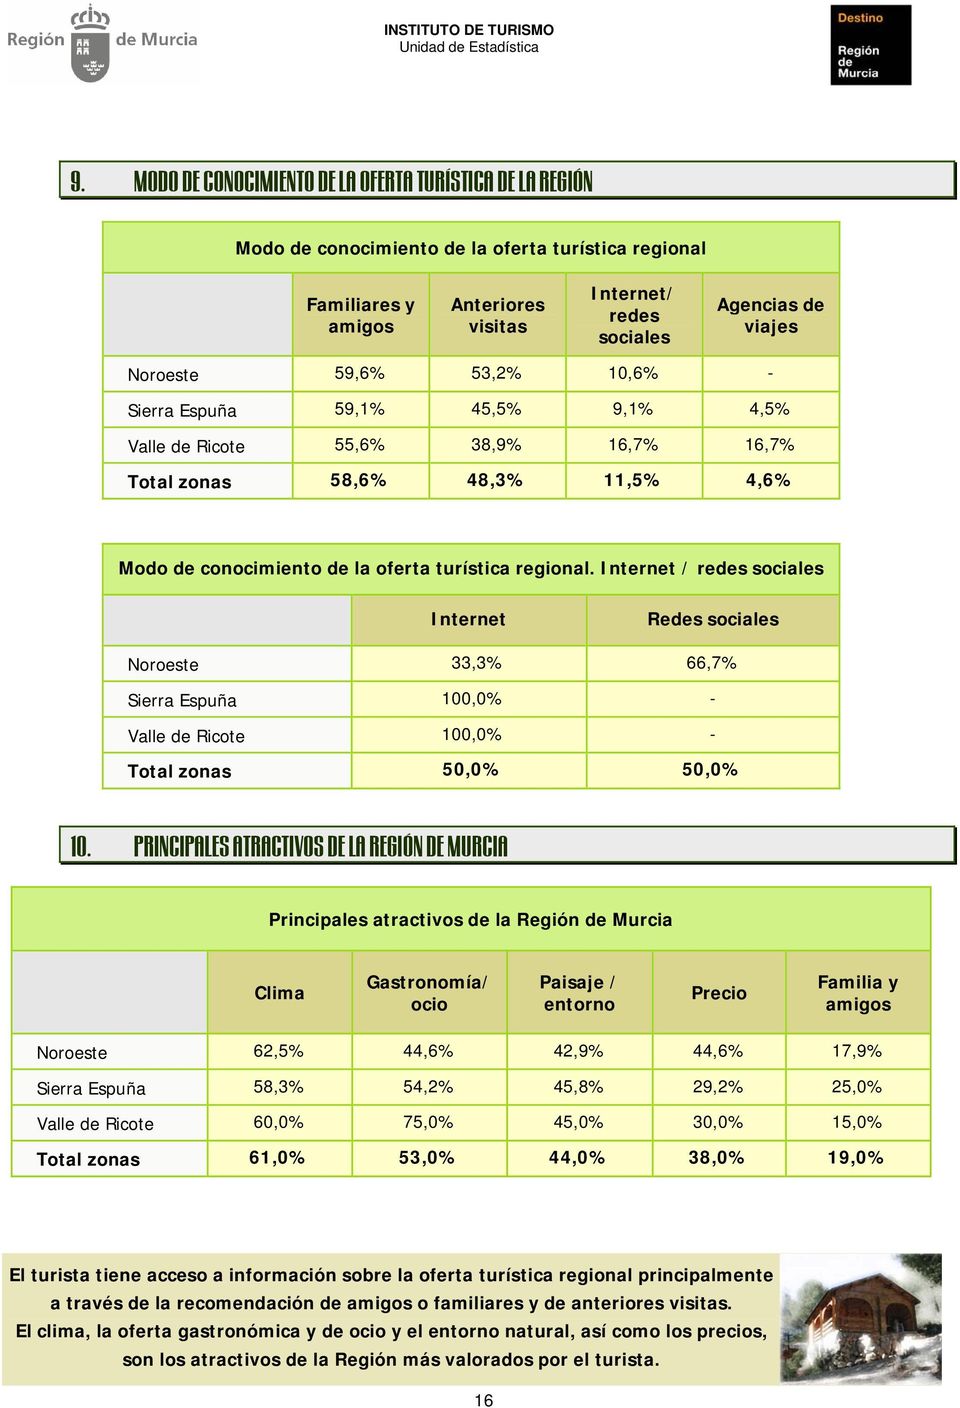 Internet / redes sociales Internet Redes sociales Noroeste 33,3% 66,7% Sierra Espuña 100,0% - Valle de Ricote 100,0% - Total zonas 50,0% 50,0% 10.